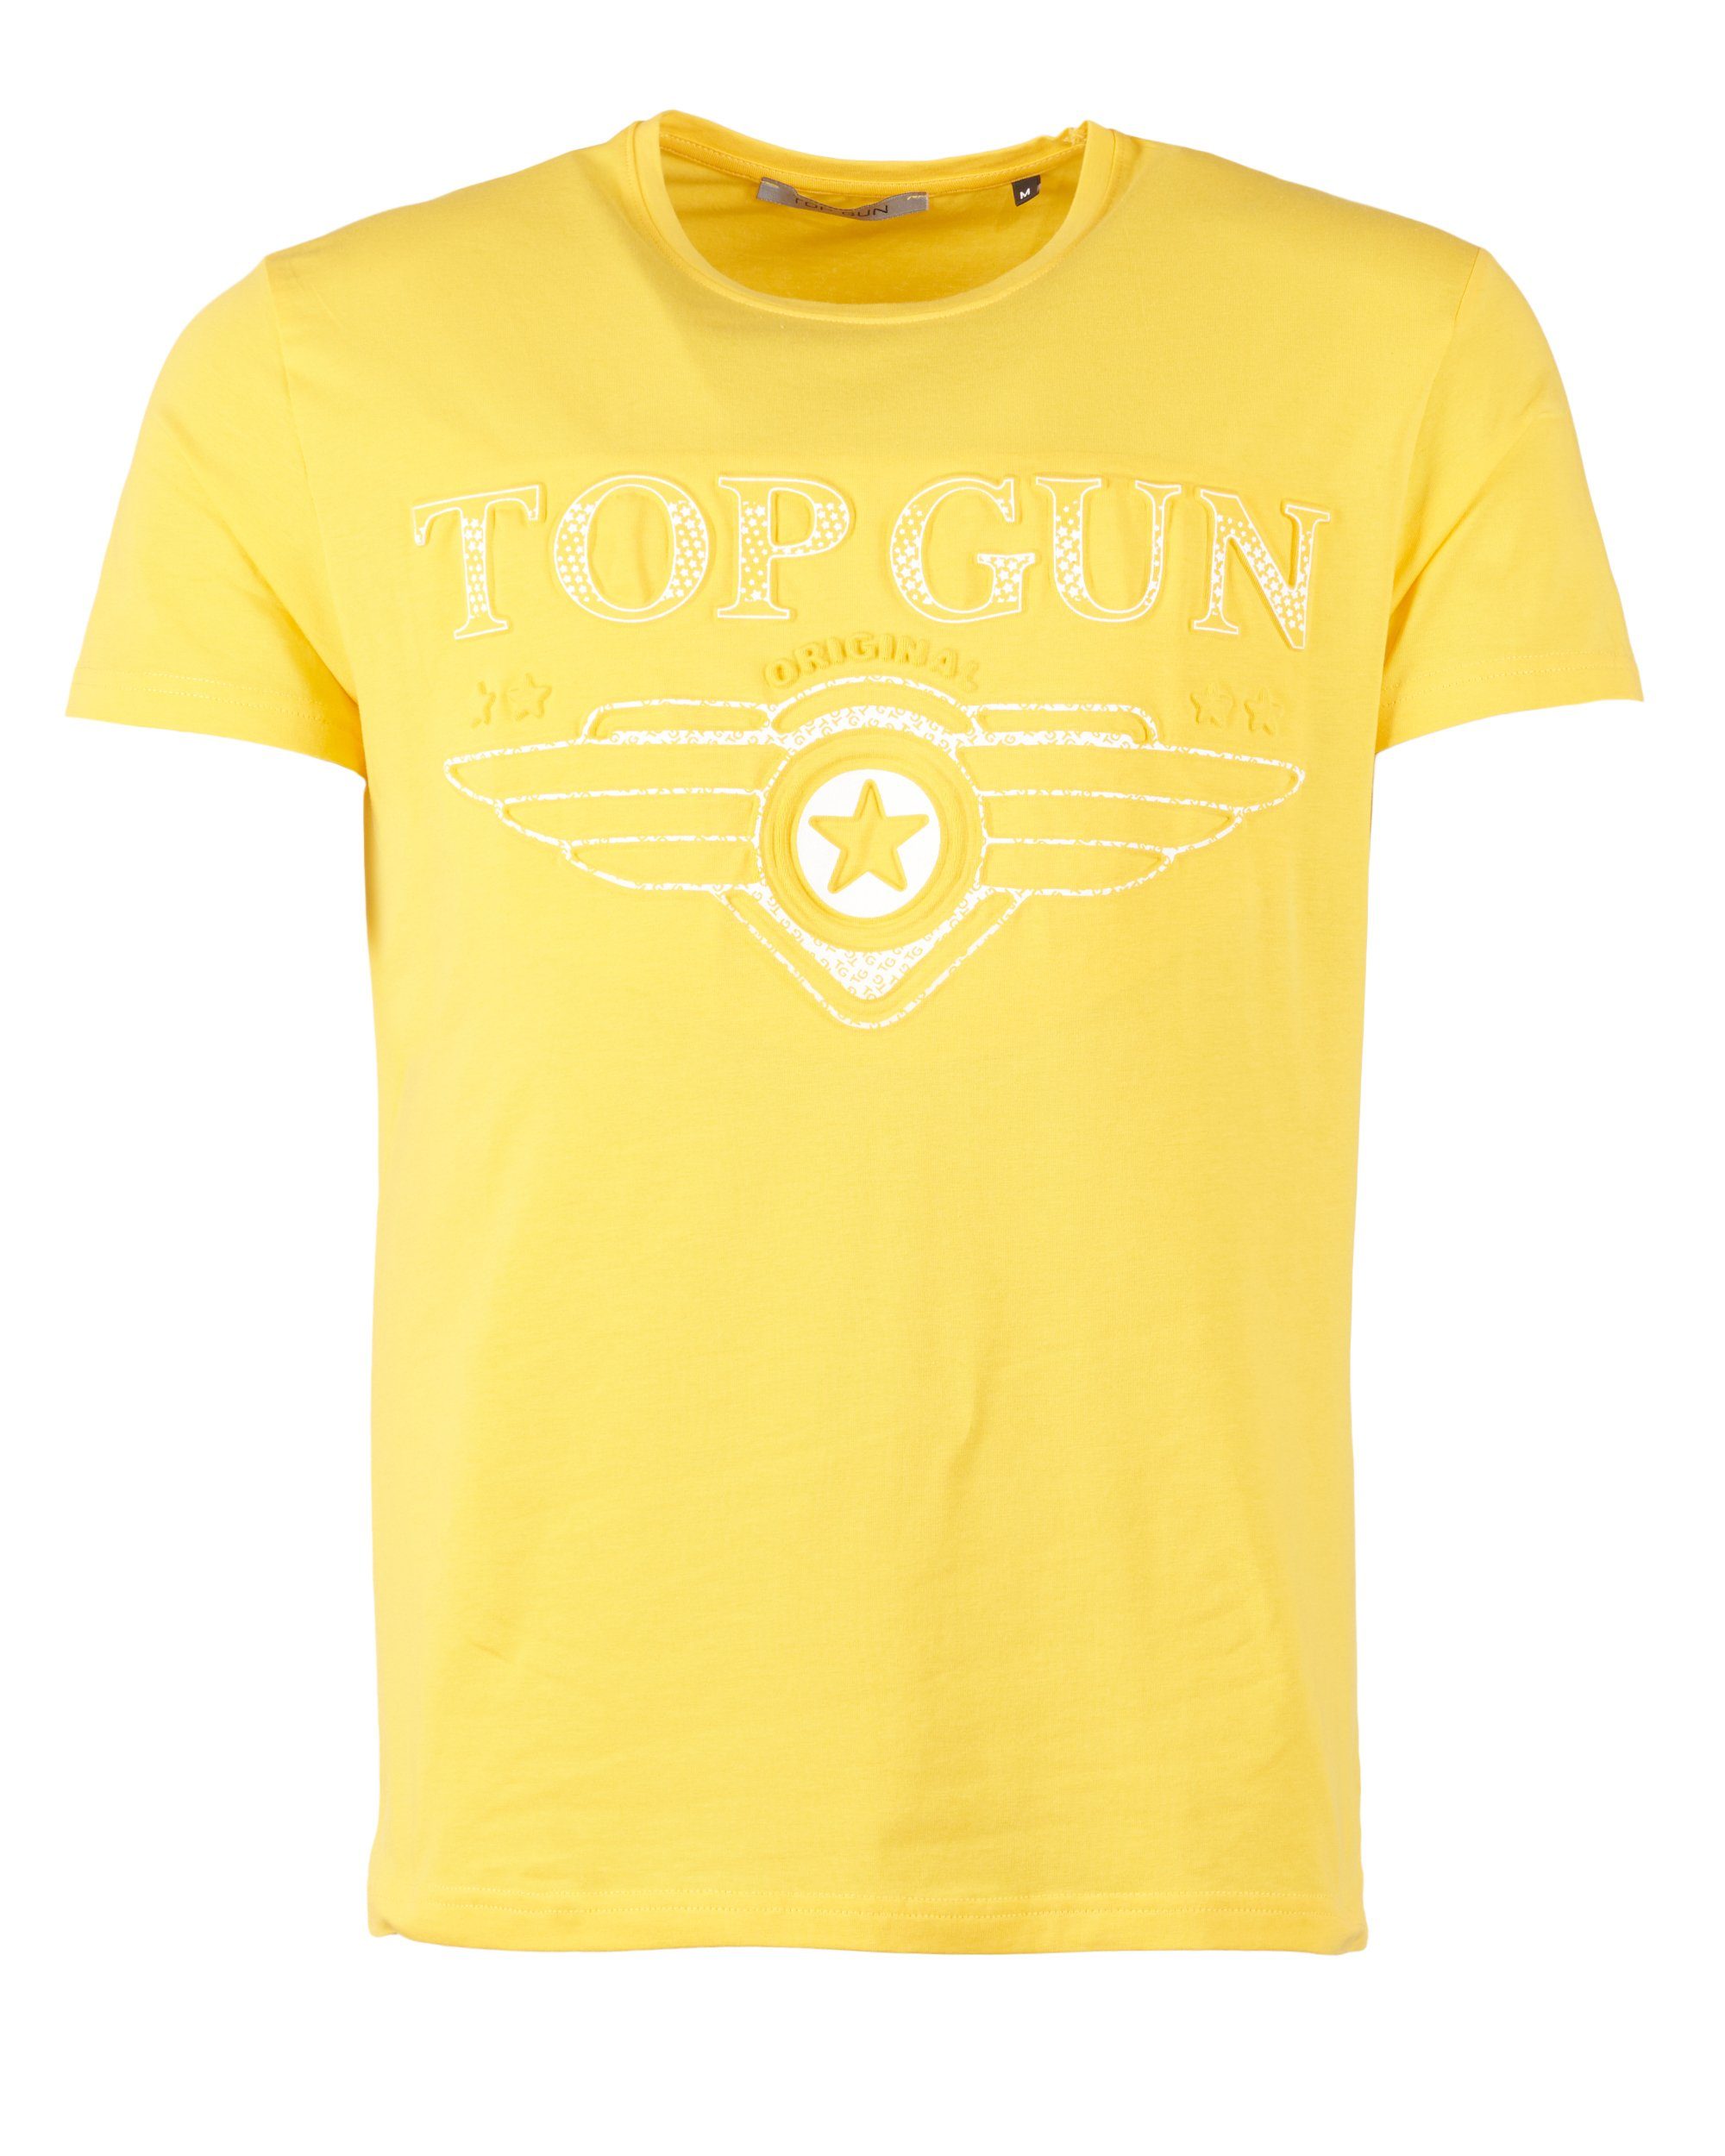 groß TOP GUN T-Shirt TG20193018 Bling